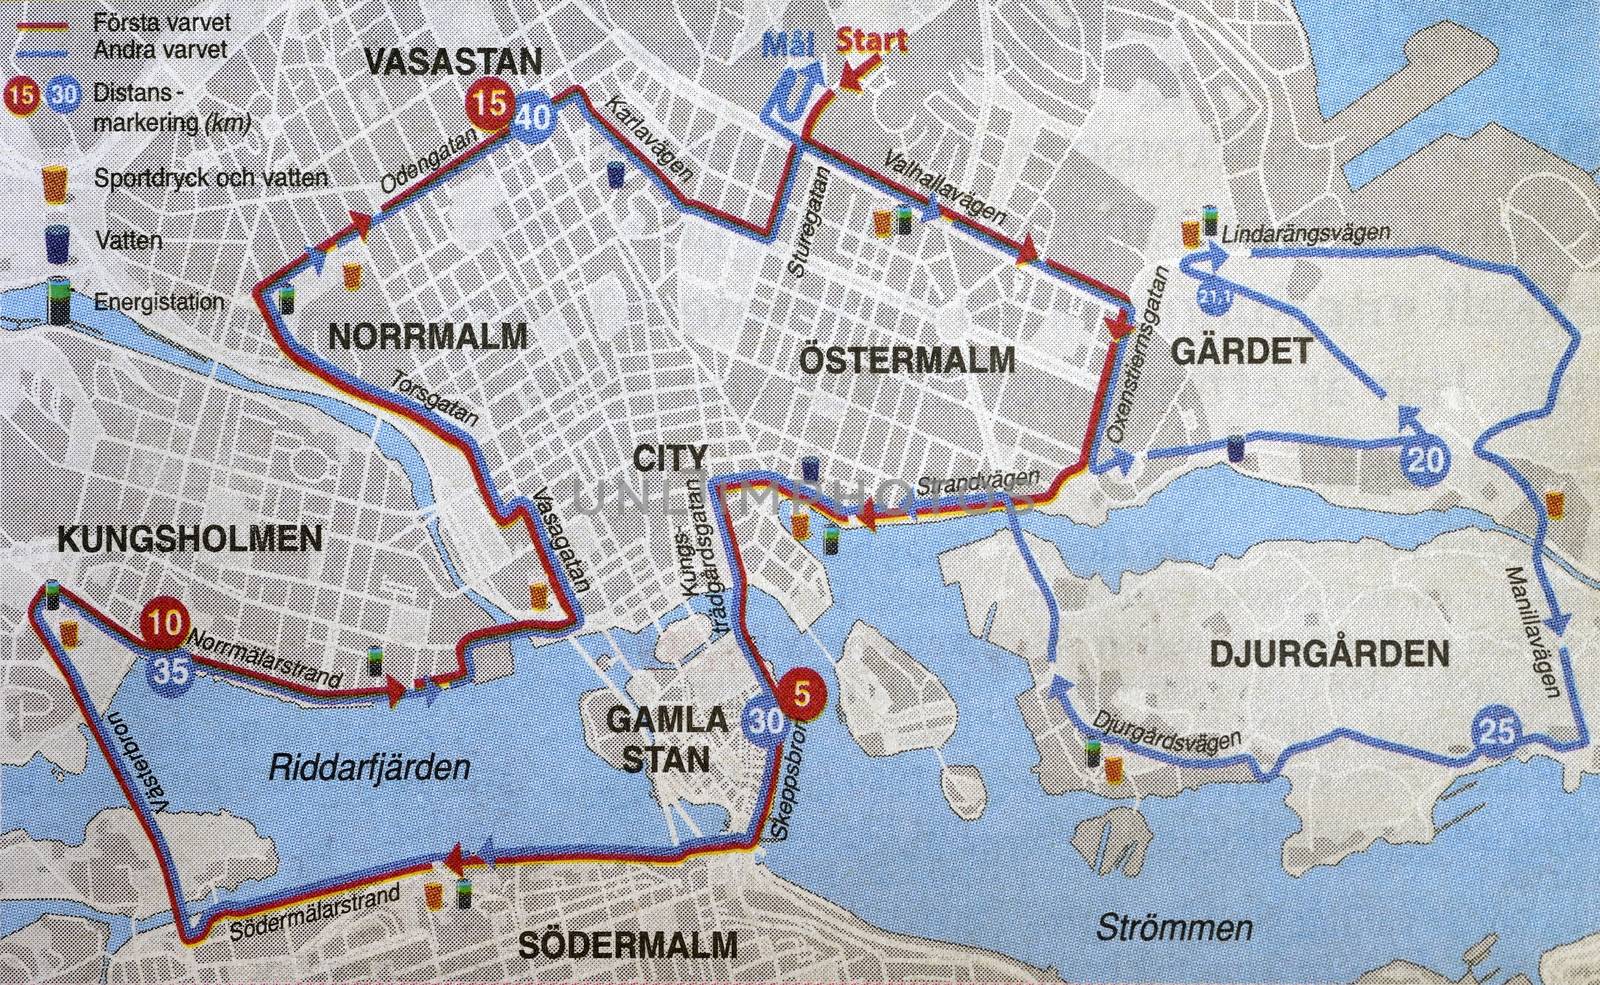 Stockholm Marathon 2015 Map by a40757